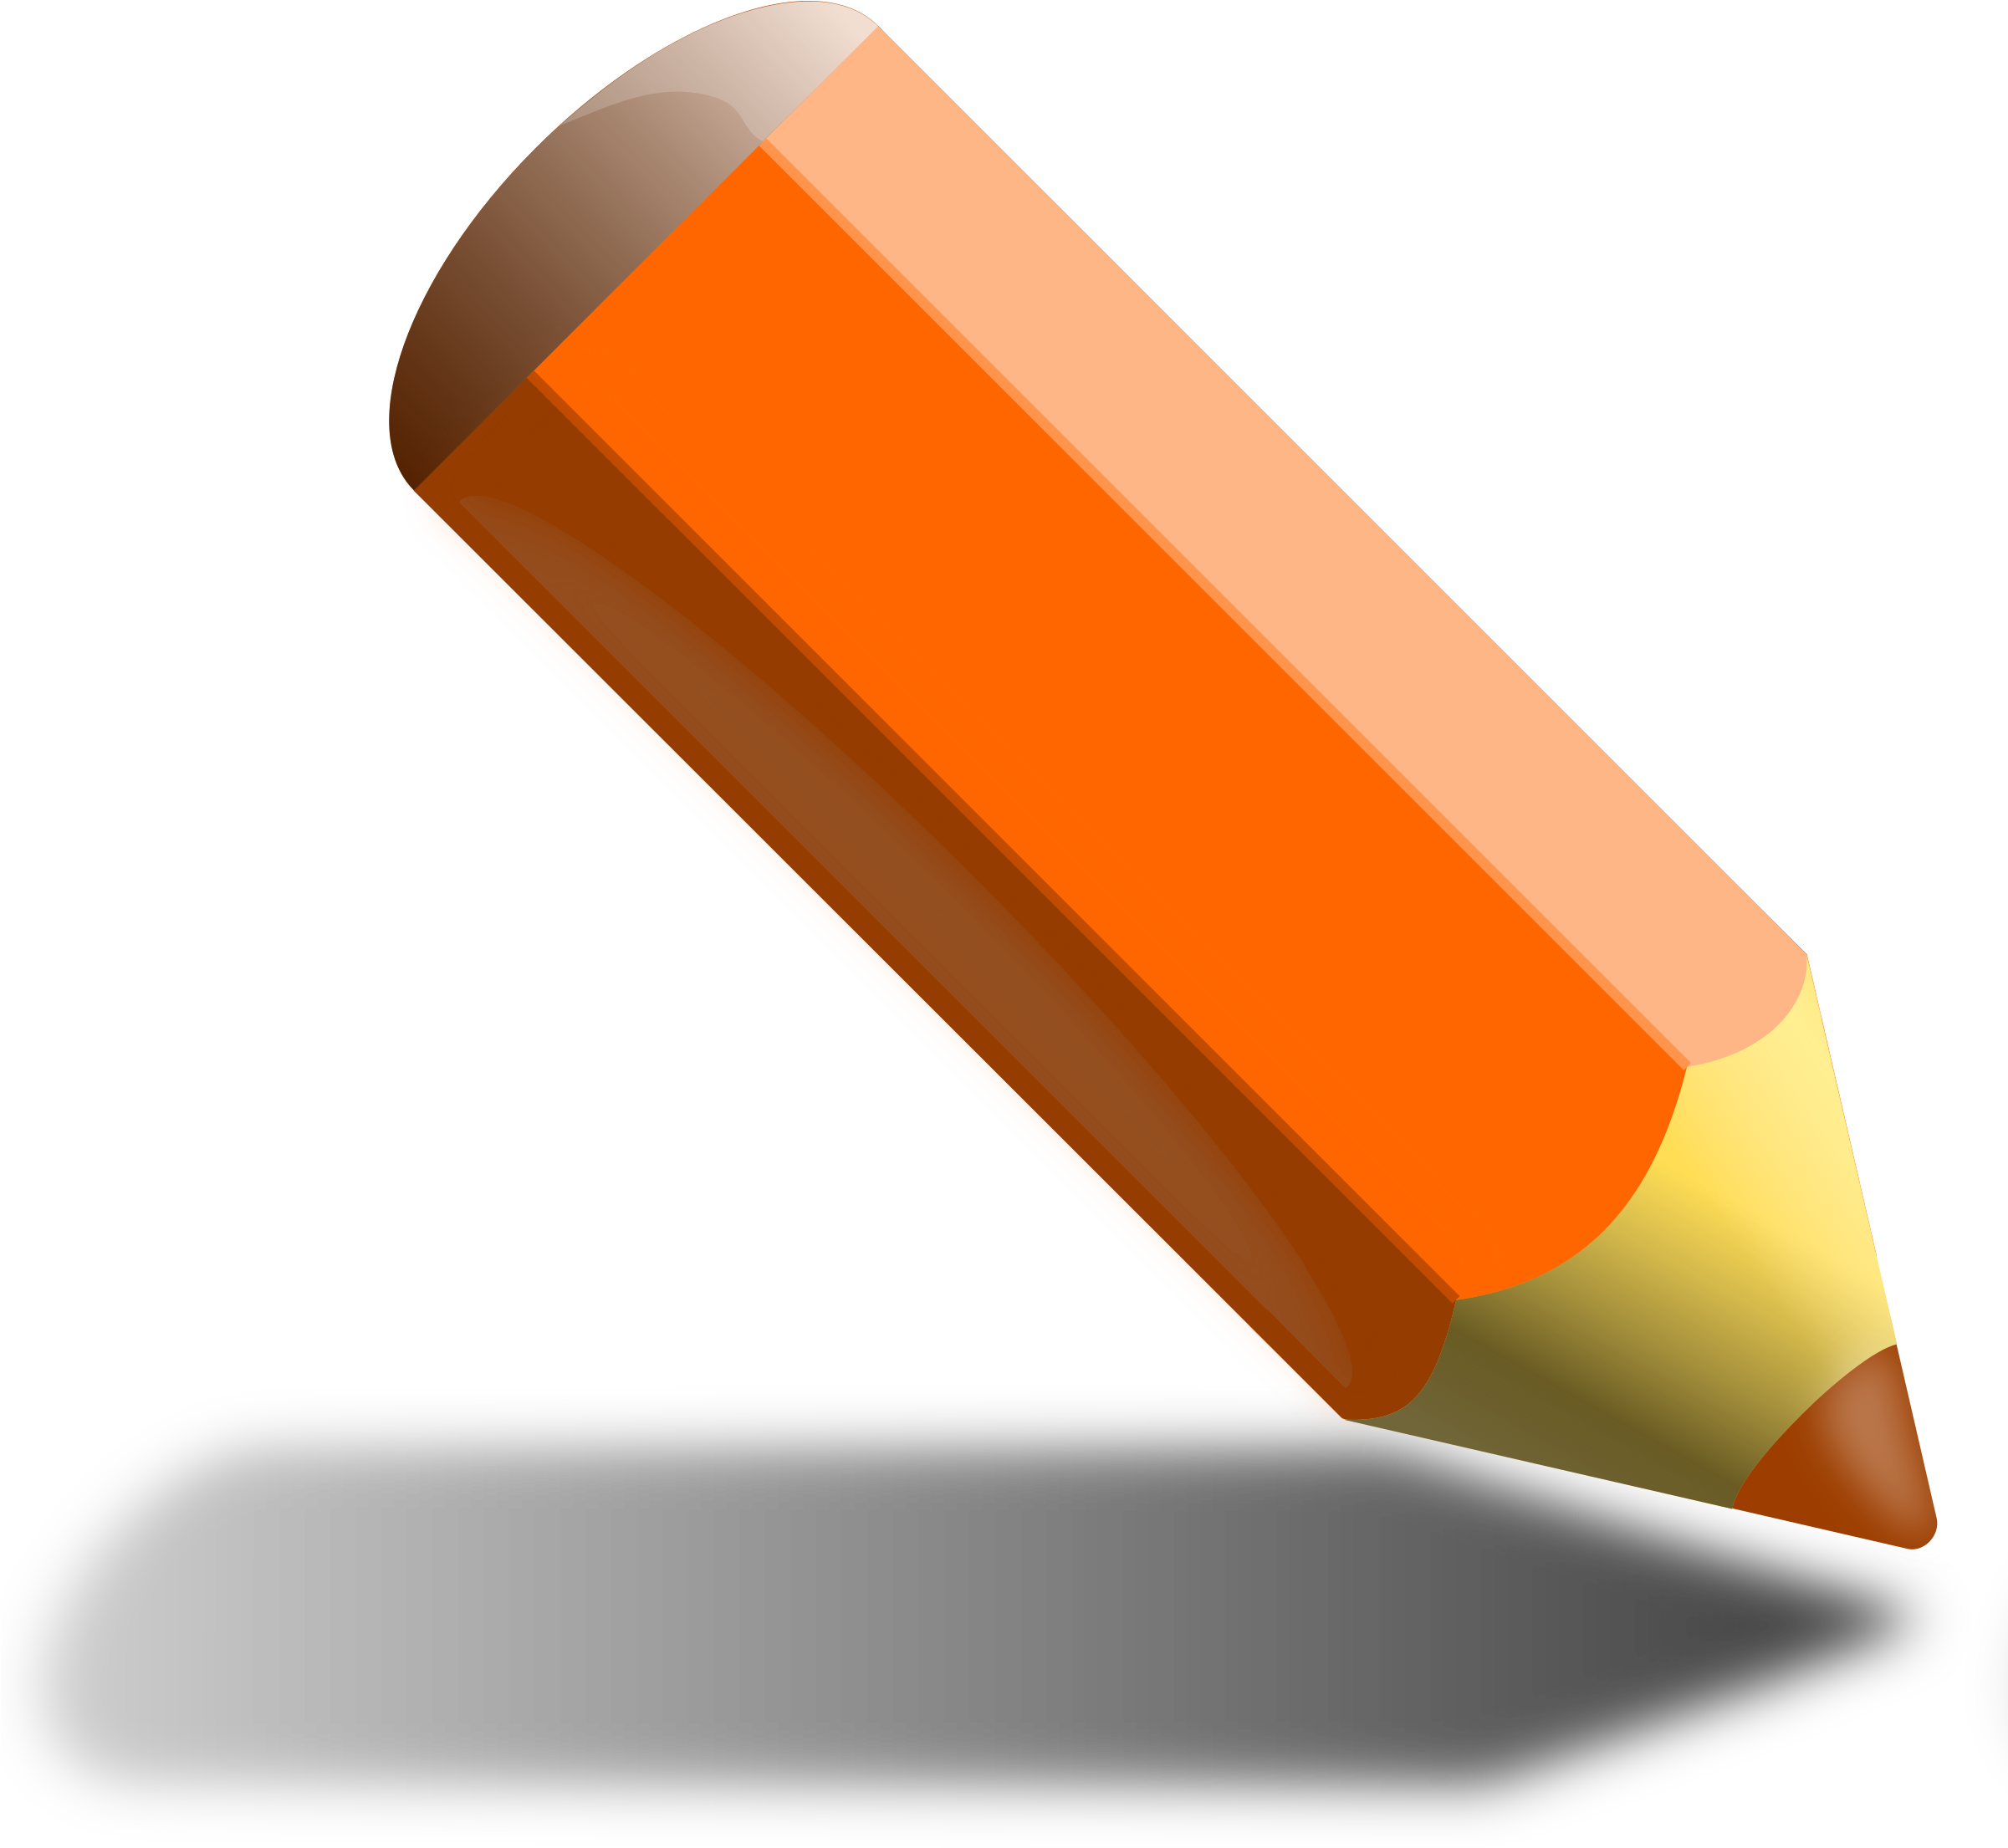 This Free Icons Png Design Of Orange Pencil